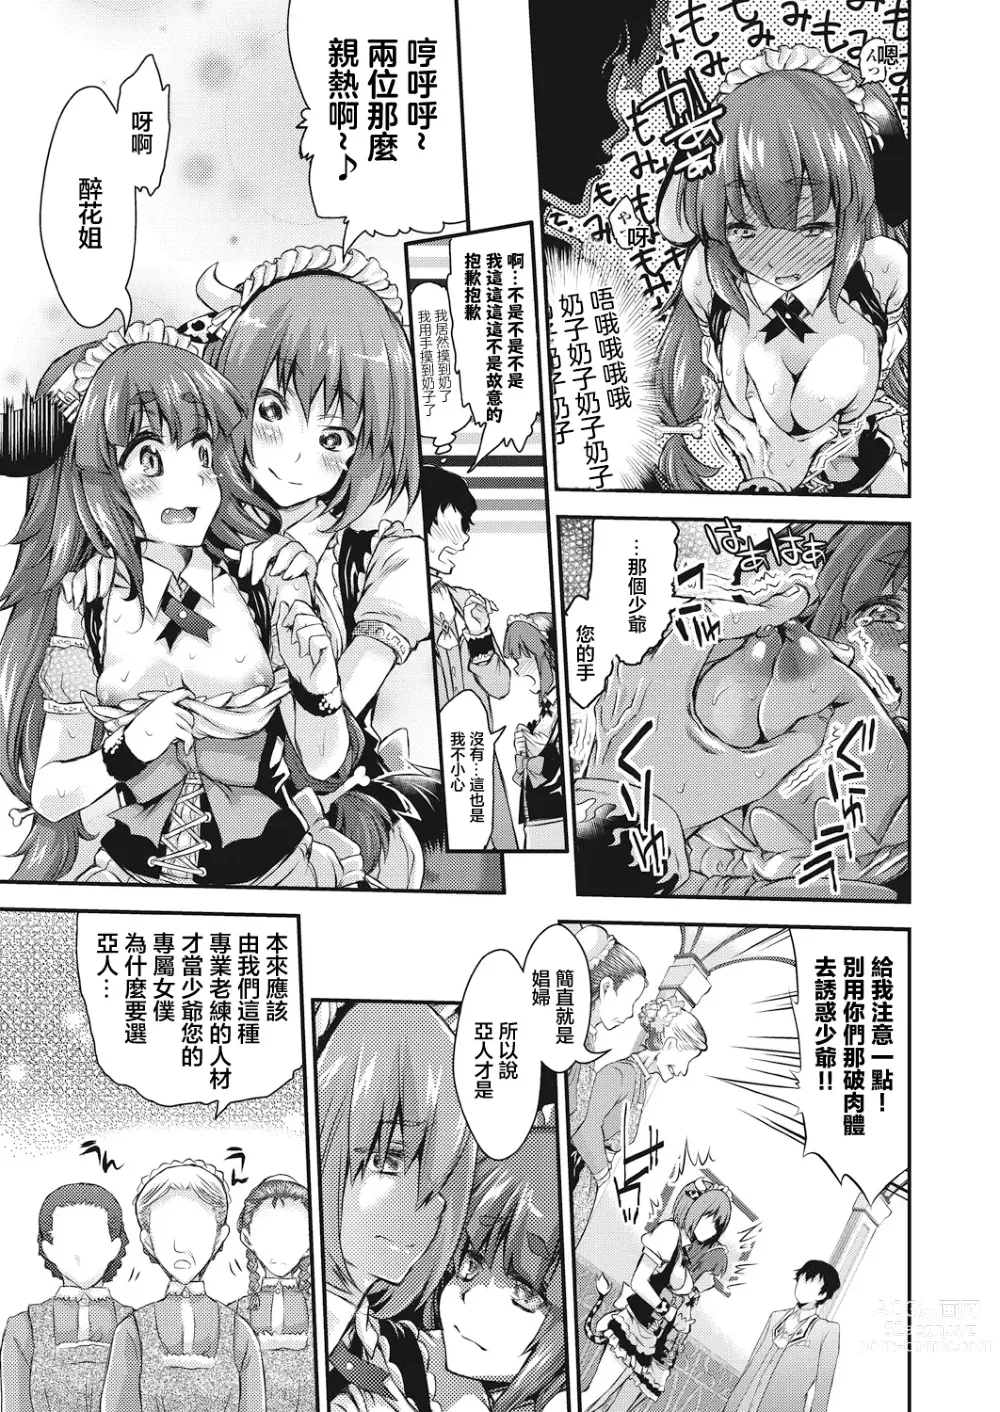 Page 9 of manga Isekai Kankou